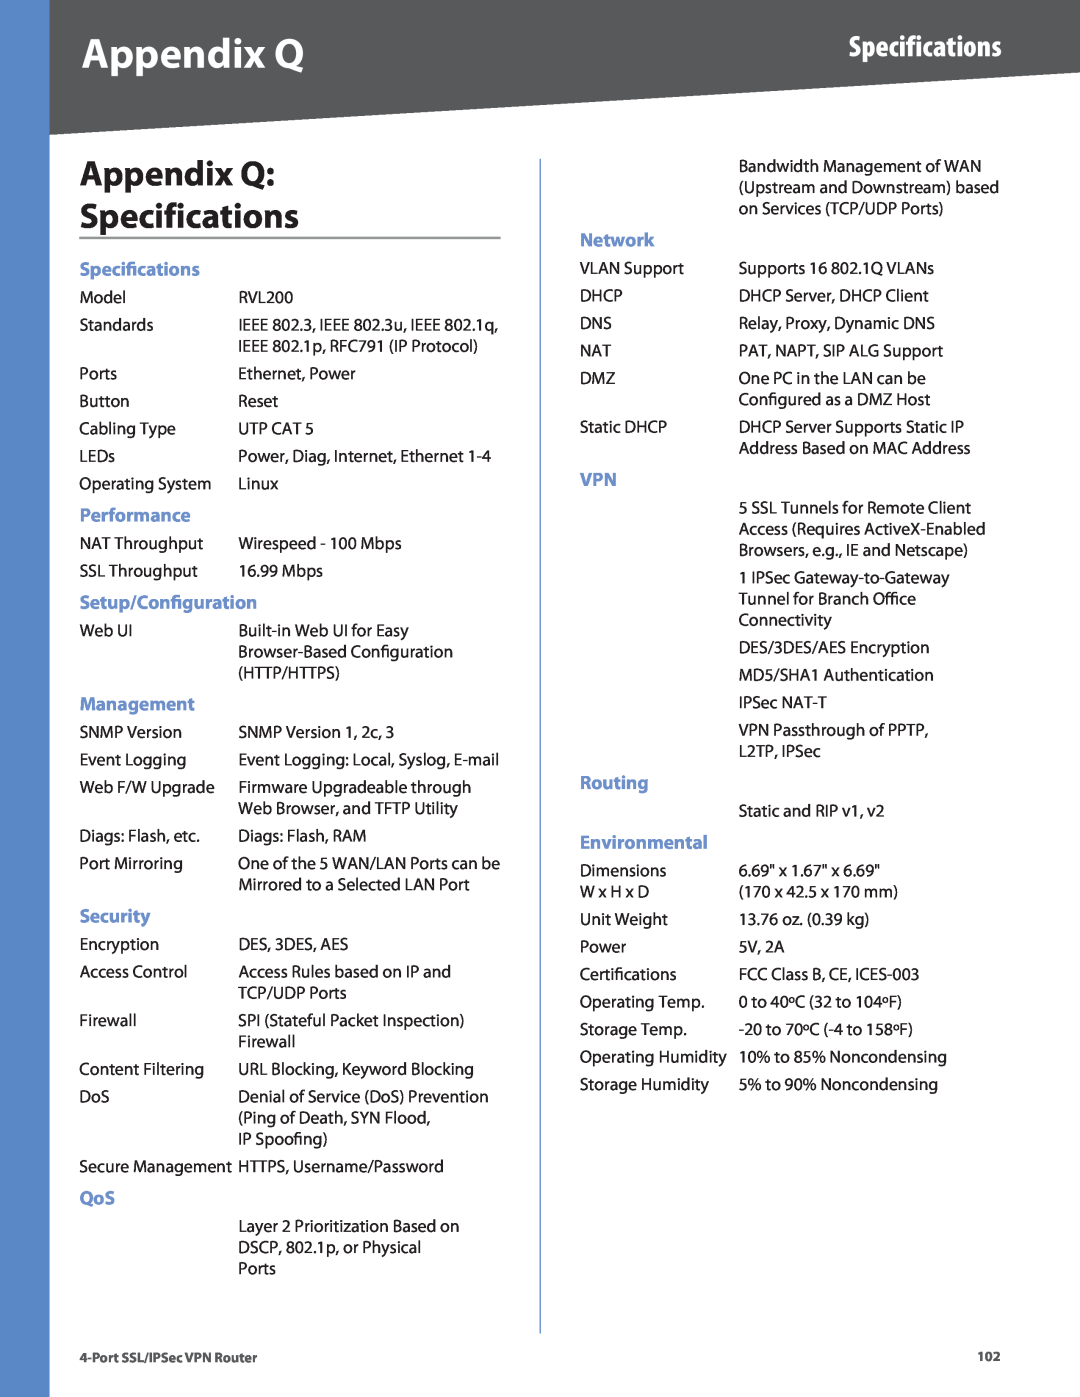 Cisco Systems RVL200 manual Appendix Q Specifications, Performance, Setup/Configuration, Management, Security, Network 